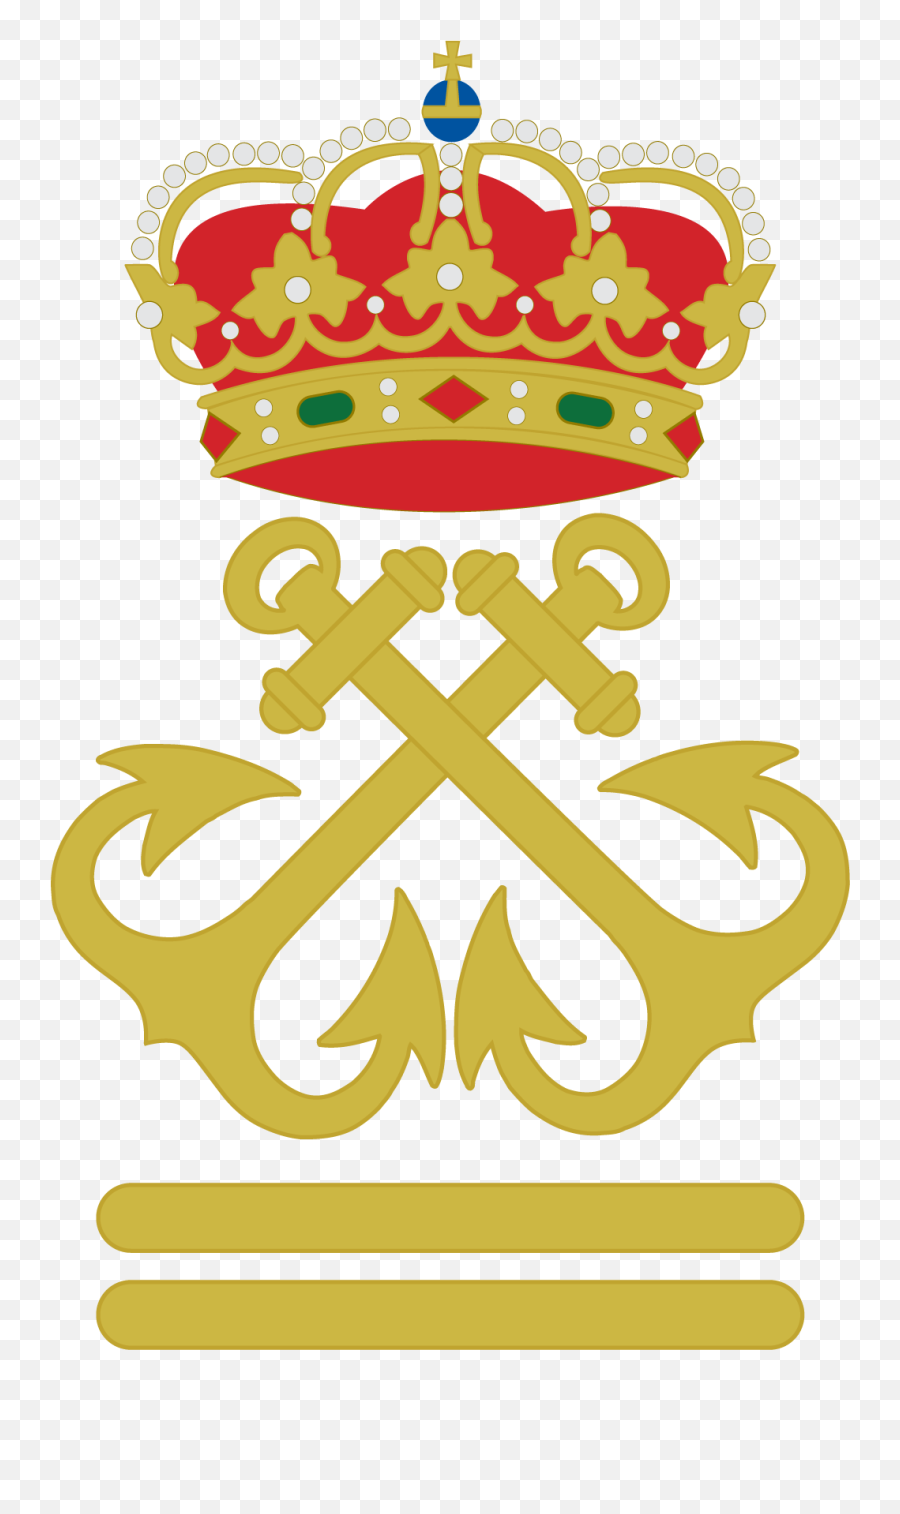 Filedistintivo De Patrón Yatepng - Wikimedia Commons Spanish Heraldry Crown,Patron Logo Png